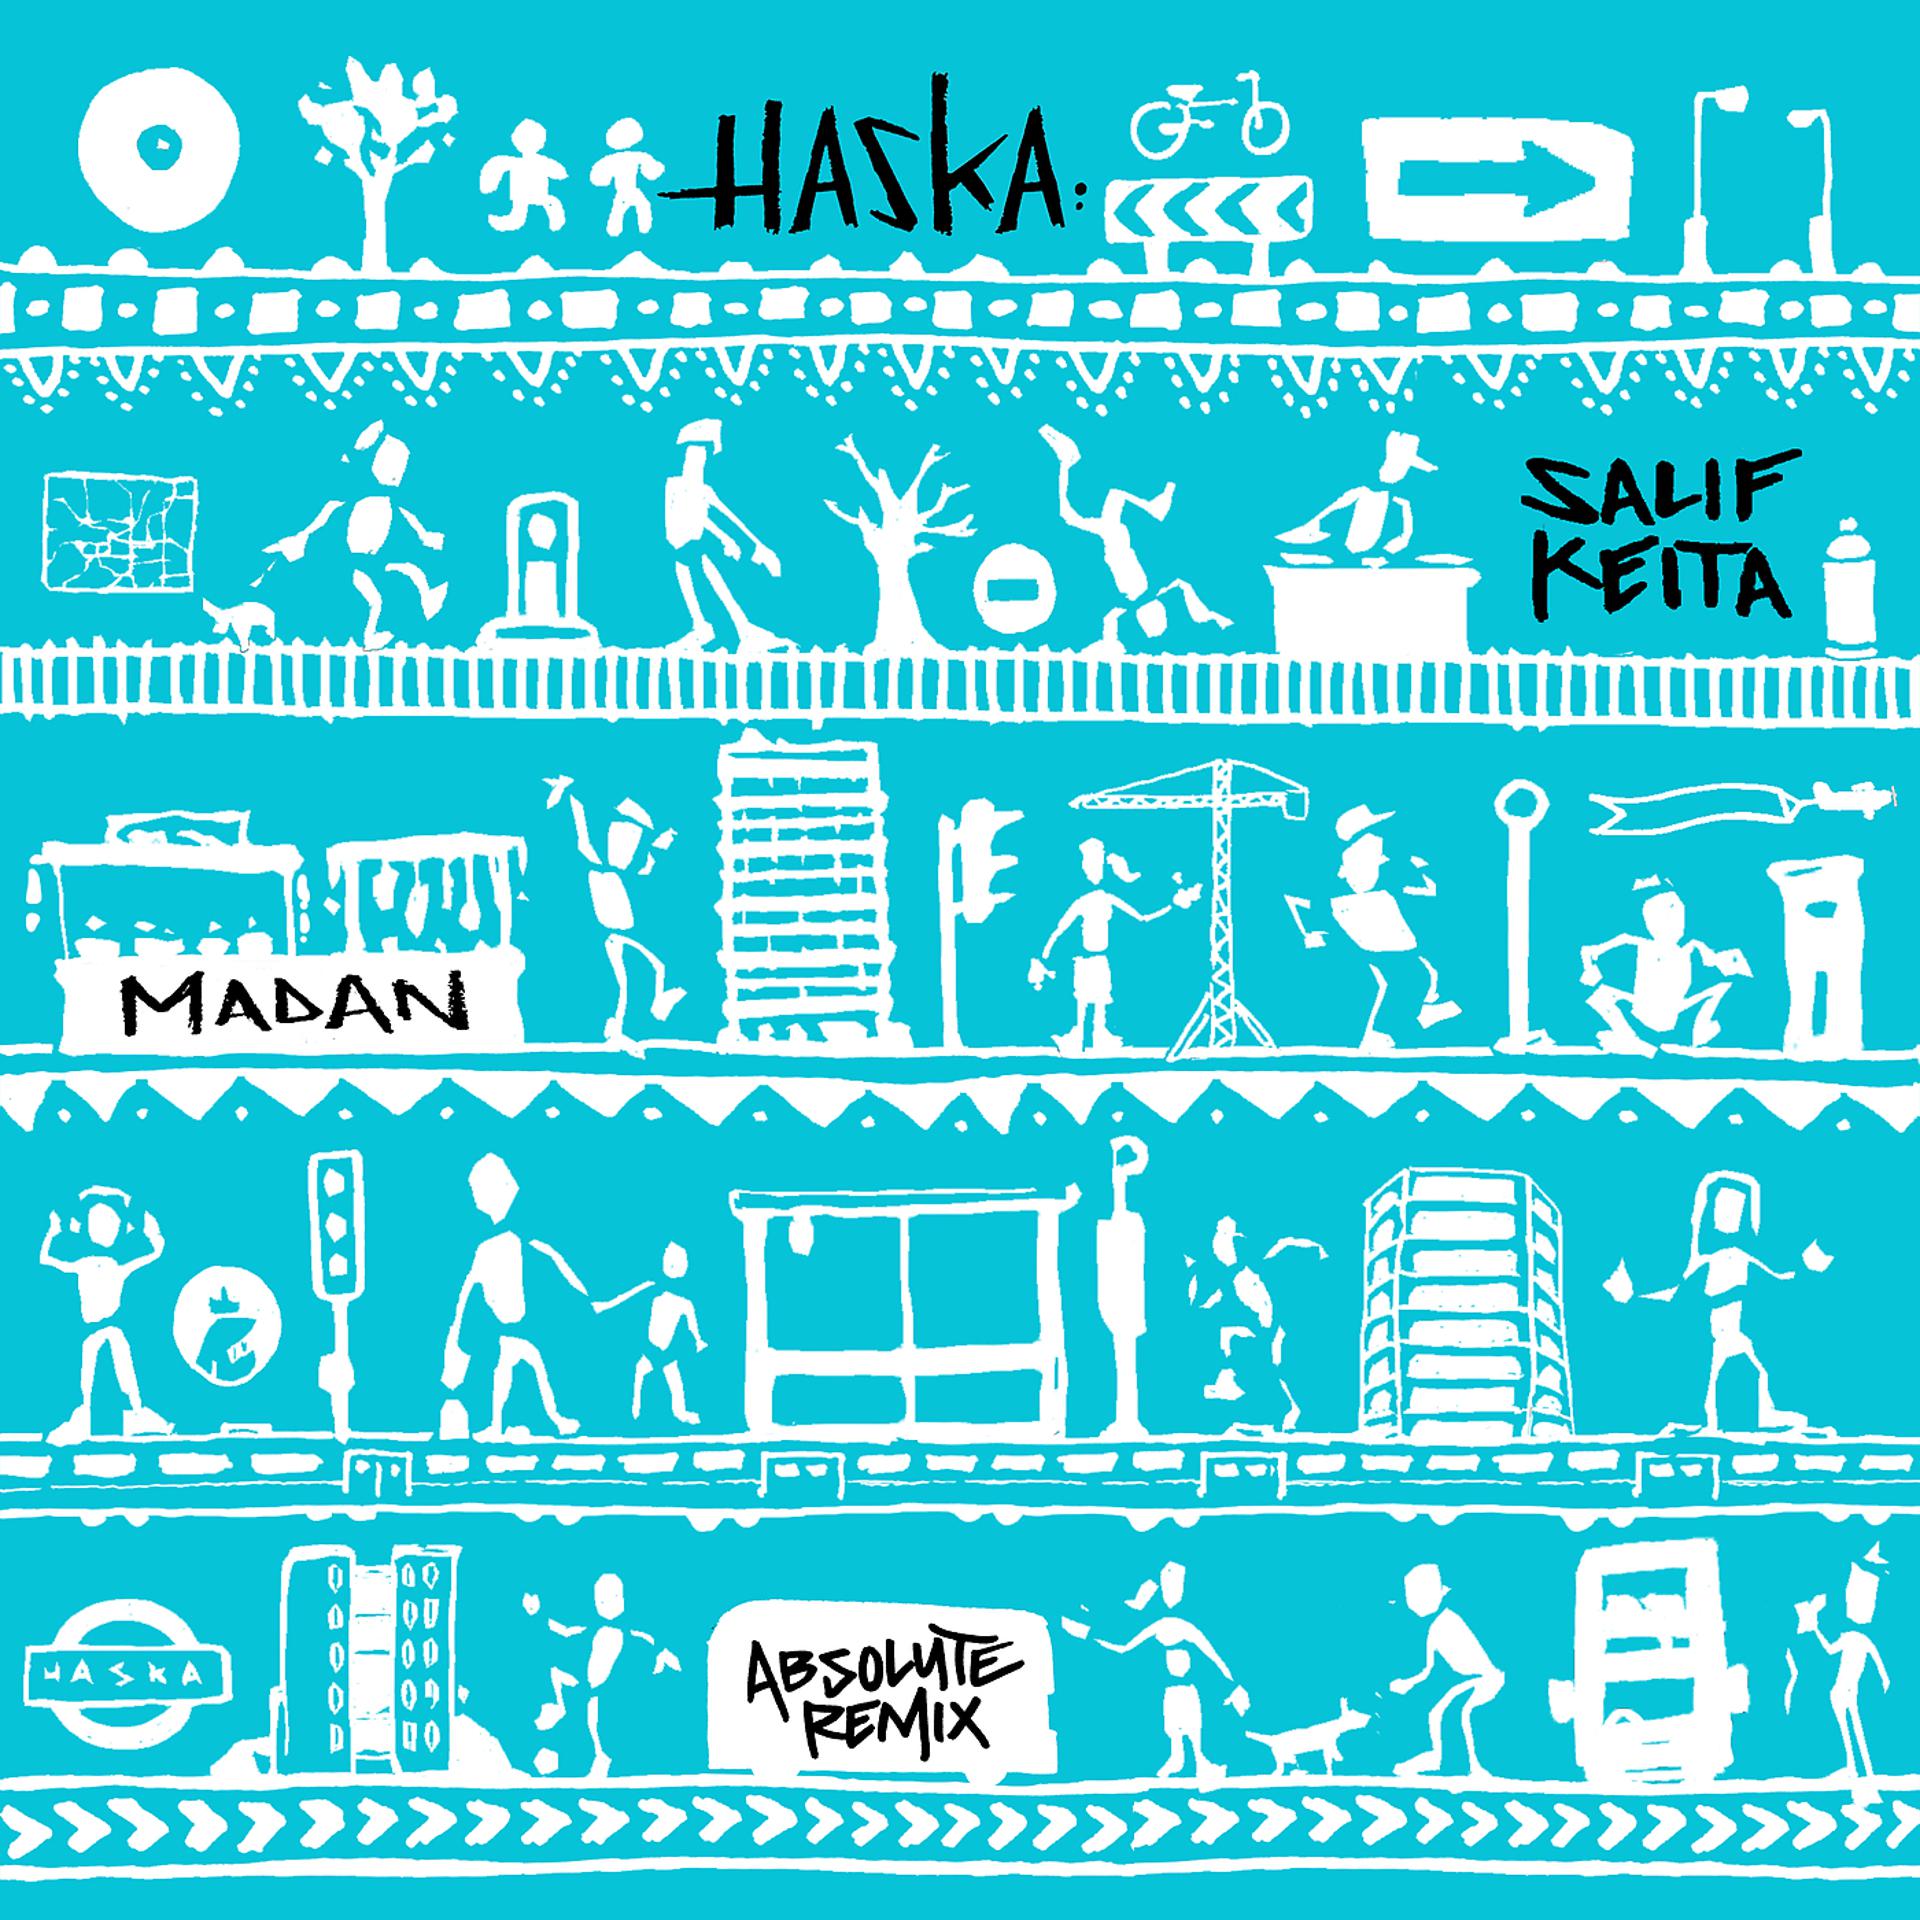 Постер к треку Haska, Salif Keita - Madan (ABSOLUTE. Remix)